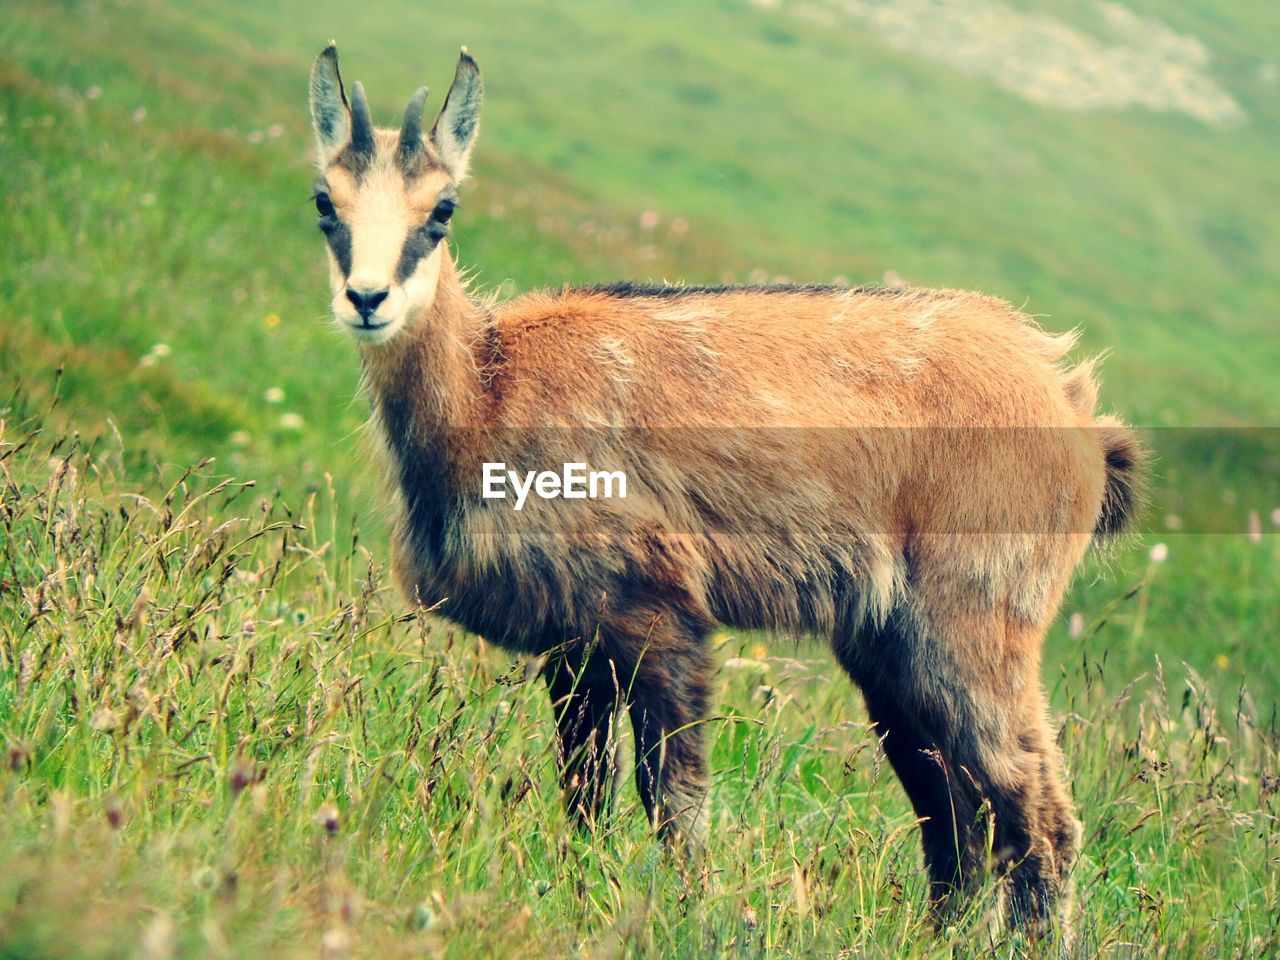 Side view portrait of female wild goat standing on grassy field